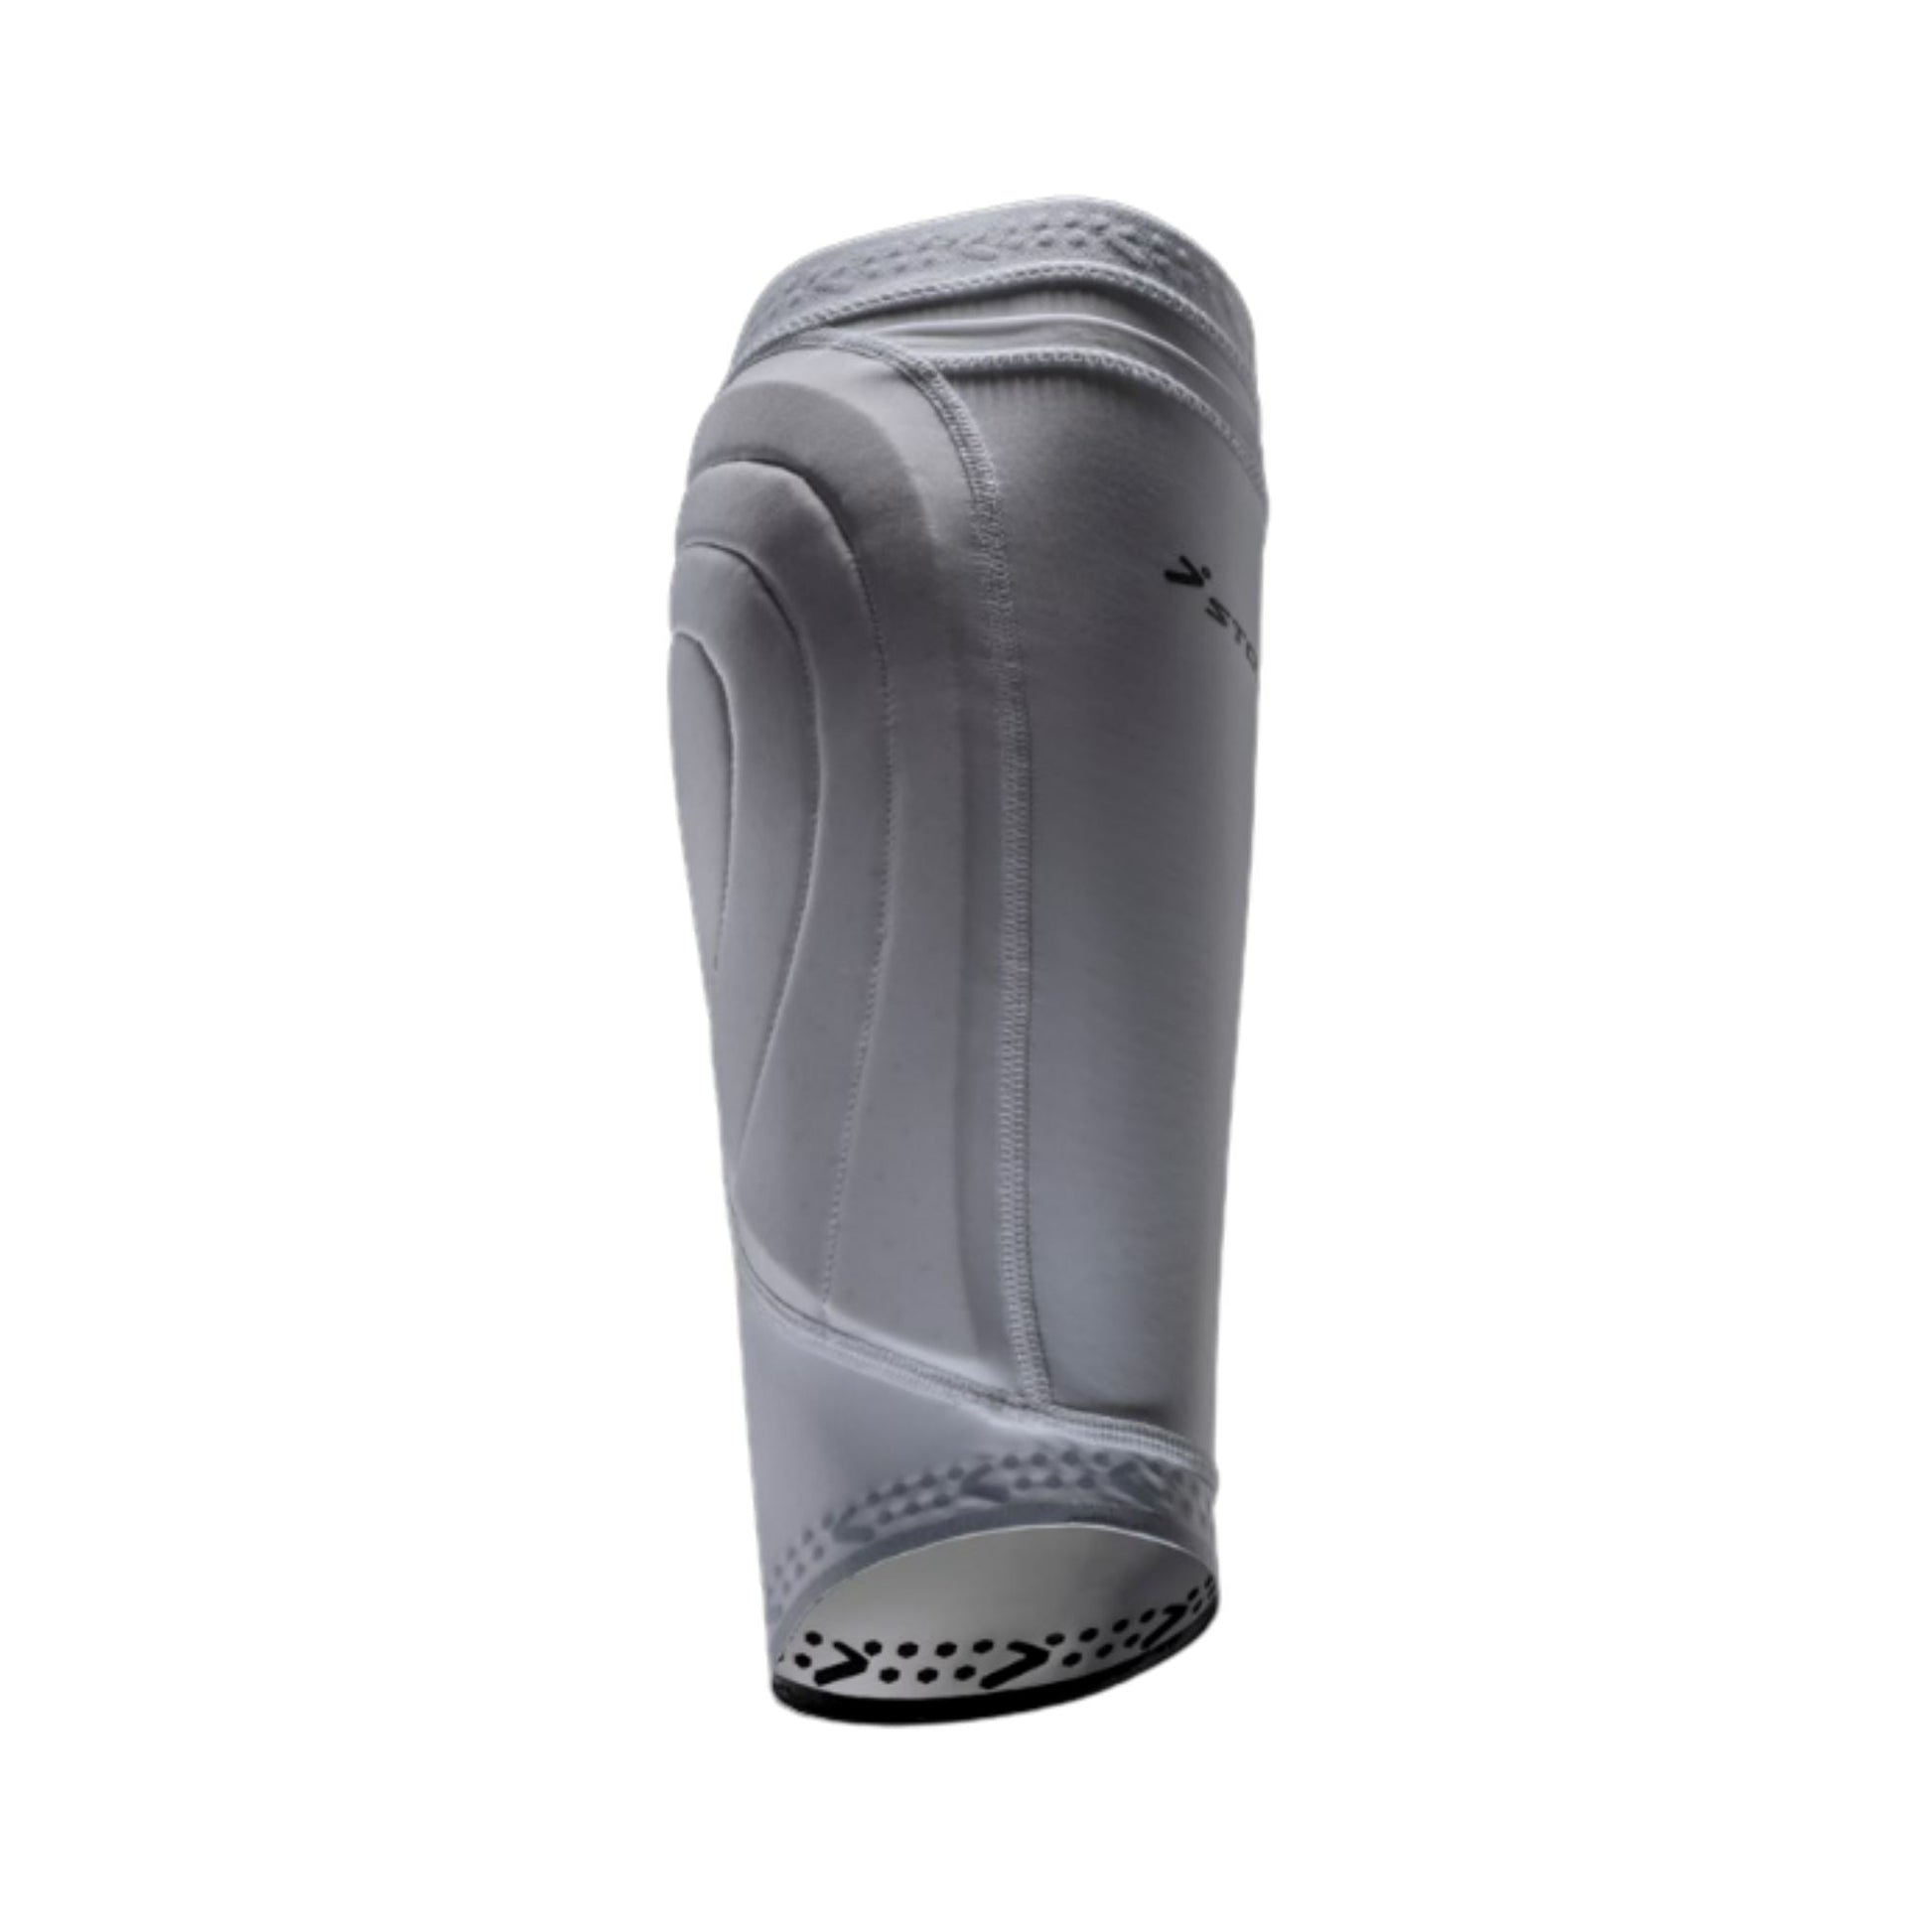 Leg Sleeves by Storelli - White leg sleeves ITASPORT 